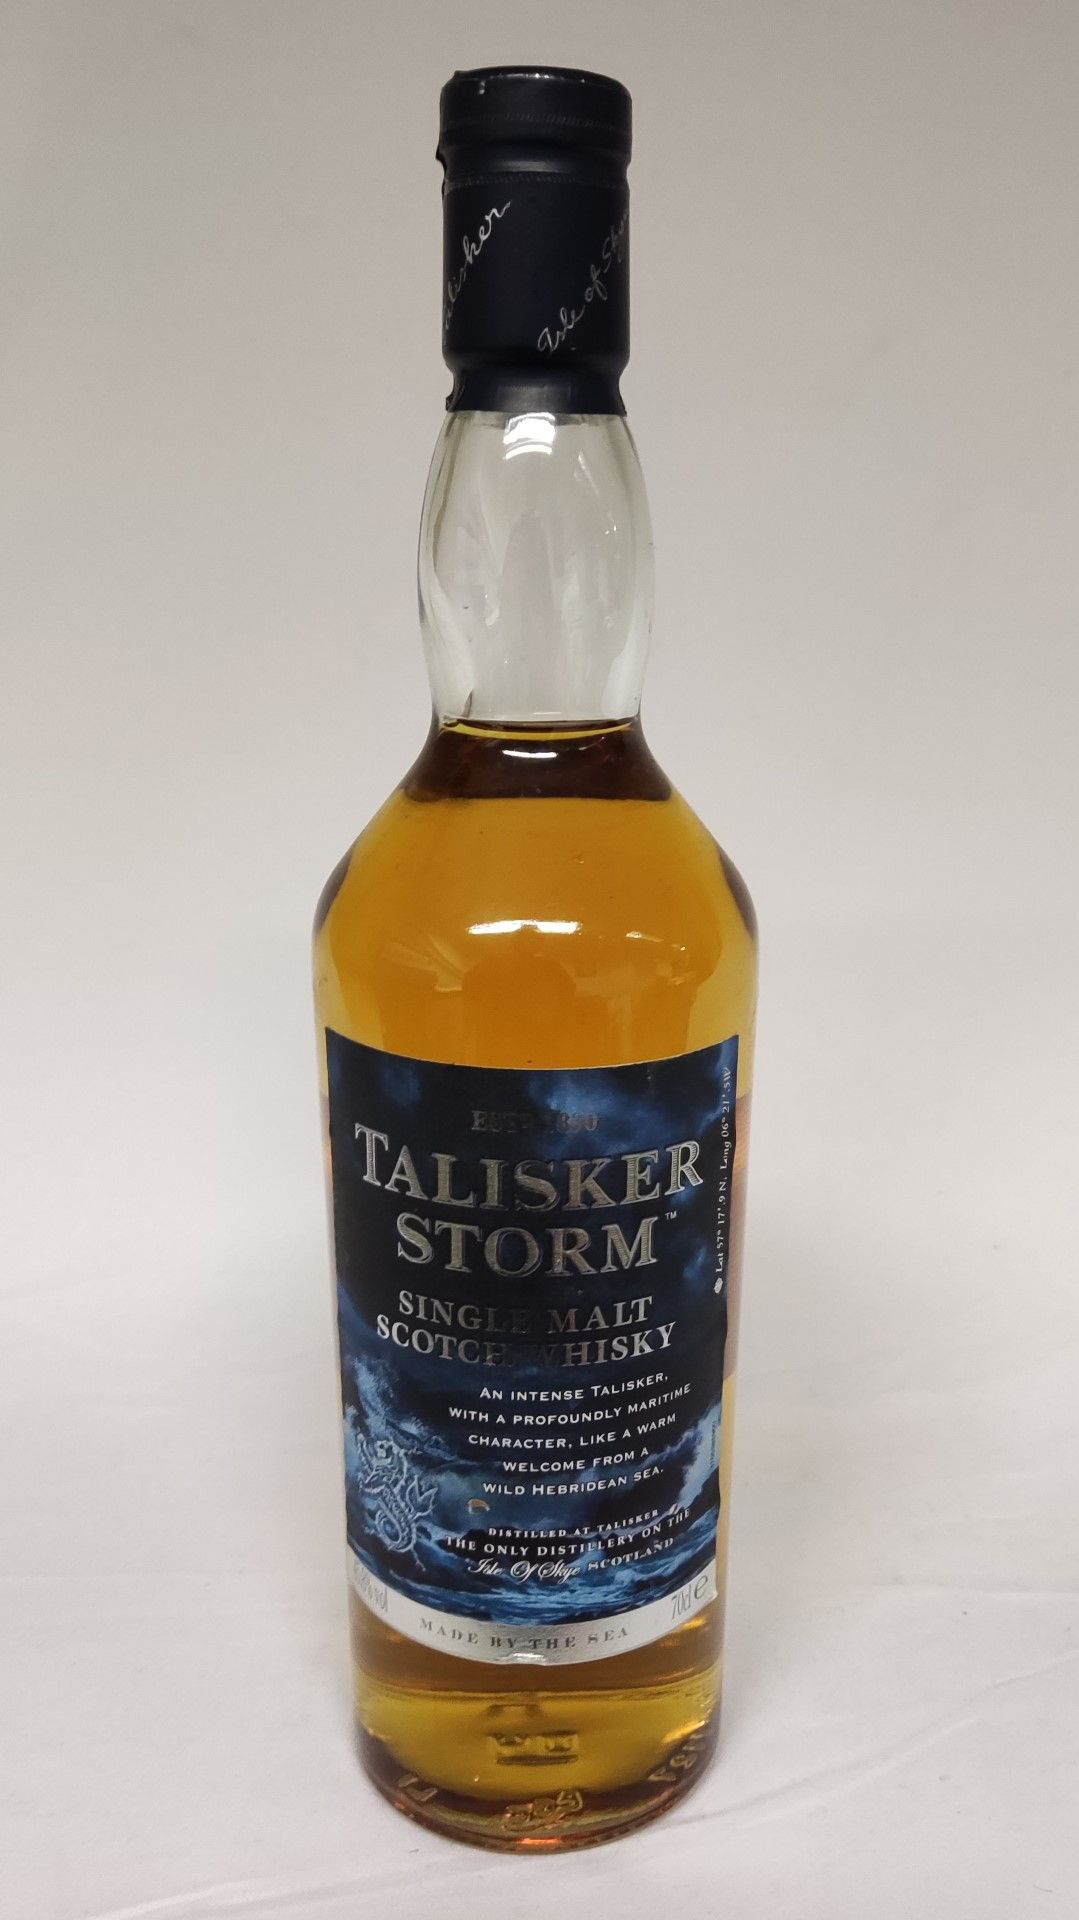 1 x Bottle of Talisker Storm Single Malt Scotch Whisky - 70cl - Retail Price £46 - Ref: WAS447/